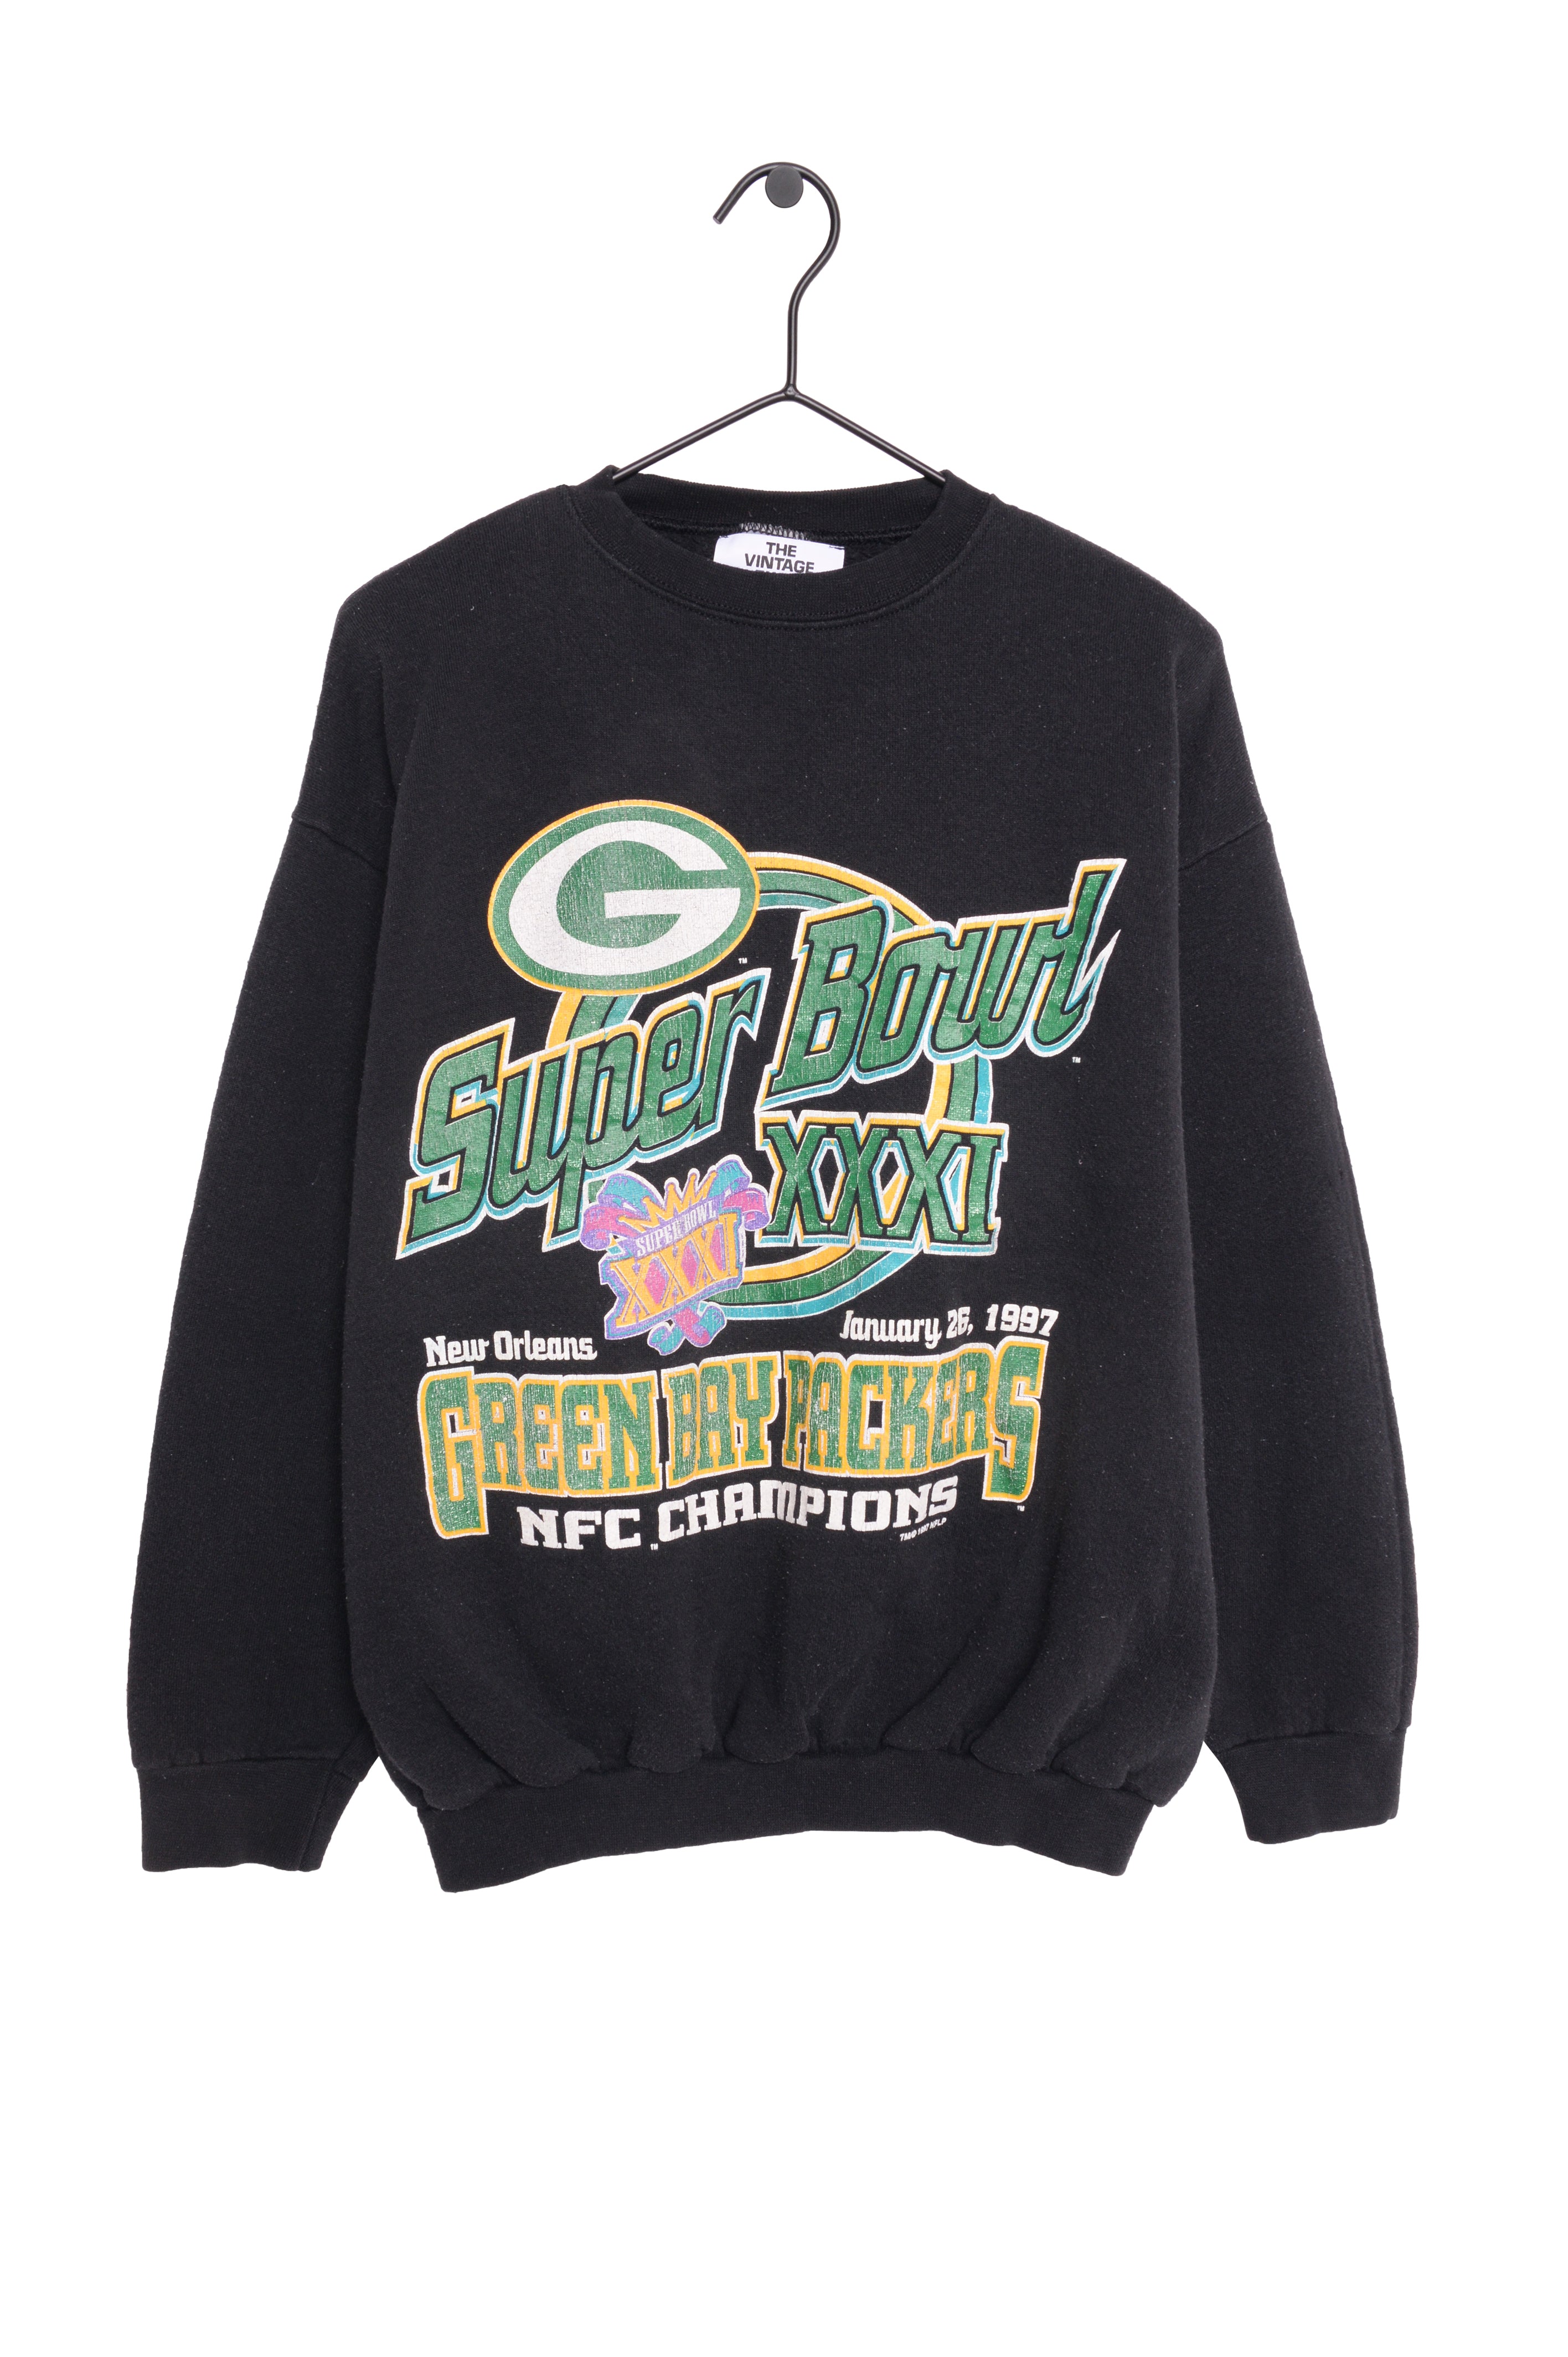 Unisex Vintage 1997 Green Bay Packers Super Bowl Sweatshirt USA